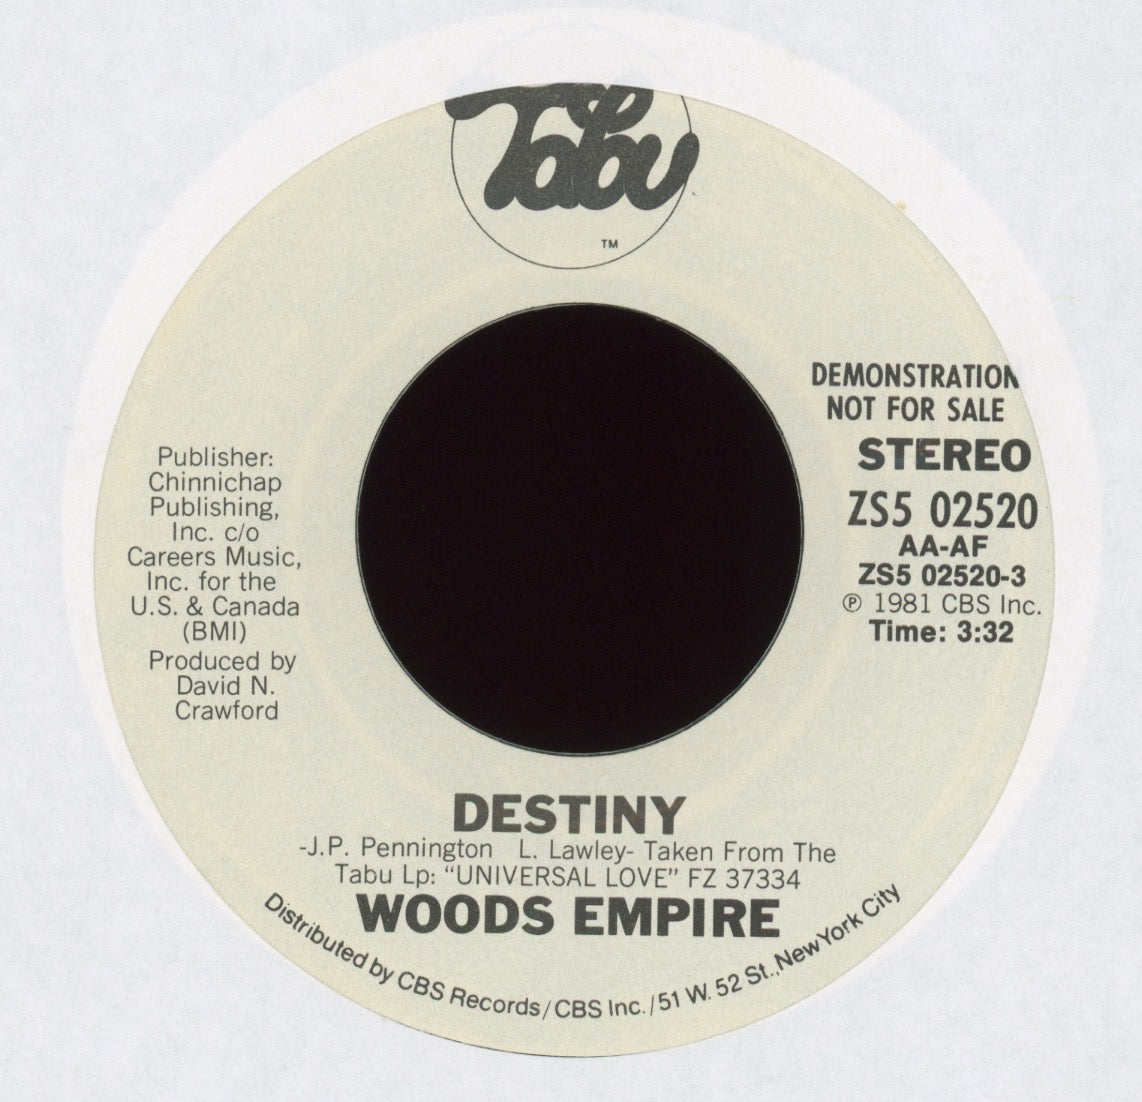 Woods Empire - Destiny on Tabu Promo